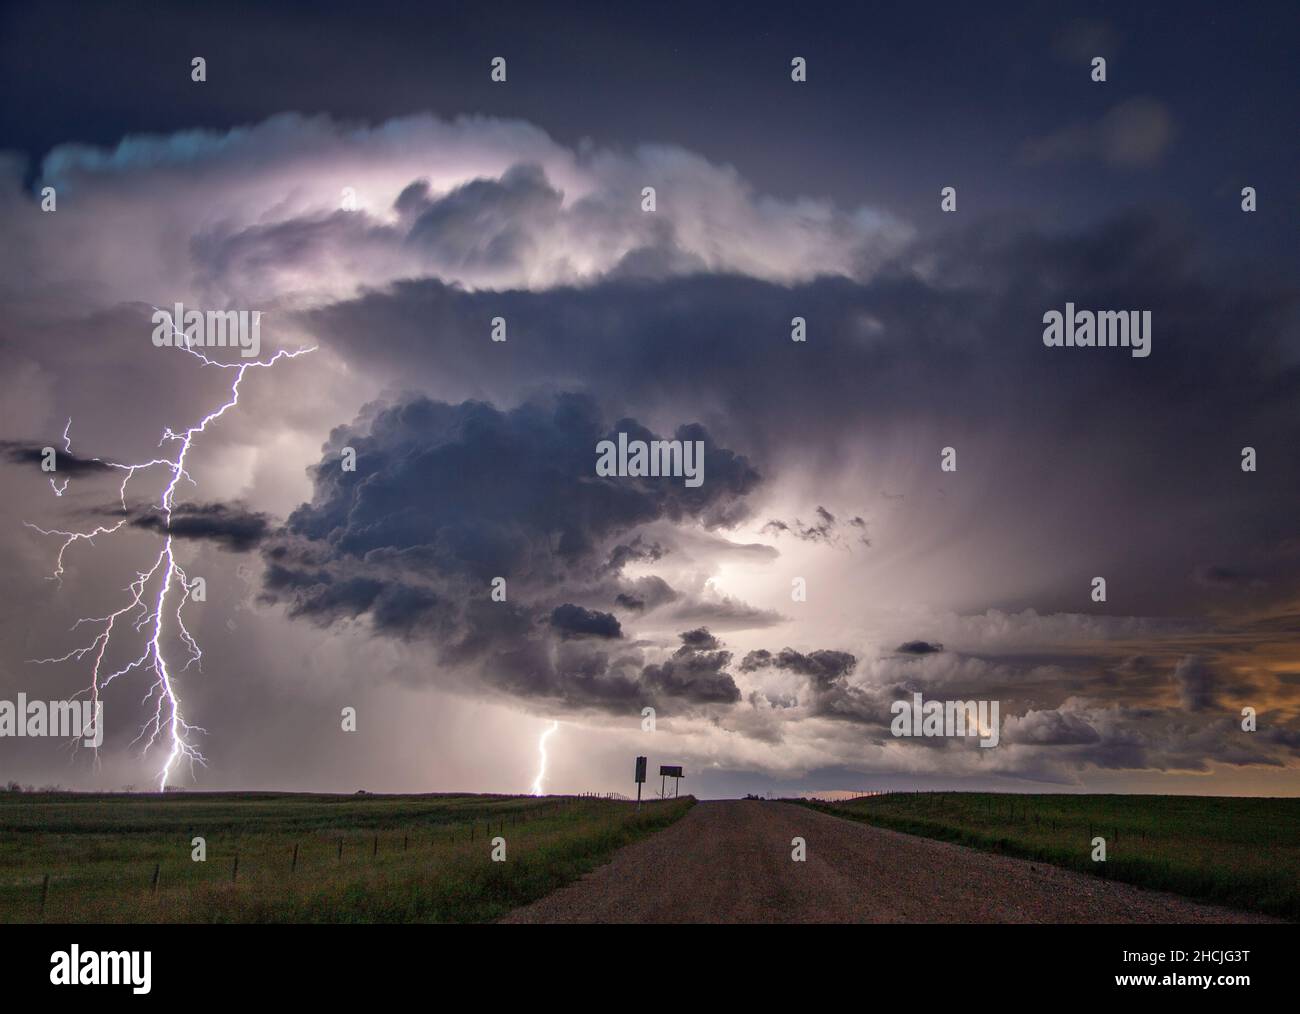 Major lightning Saskatchewan storm in summer rural Canada Stock Photo